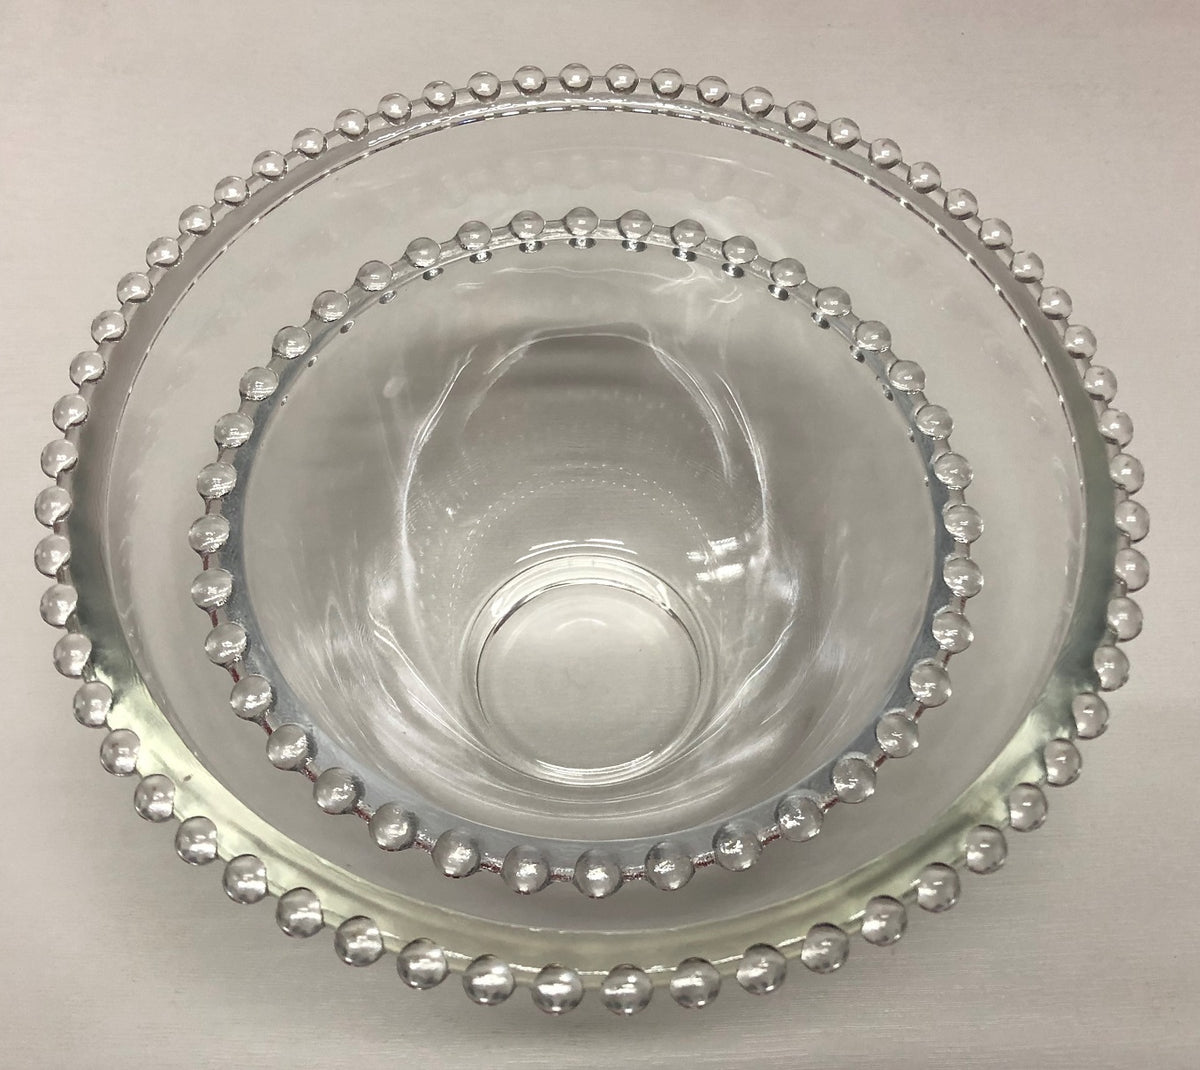 Pearl Glass Bowl